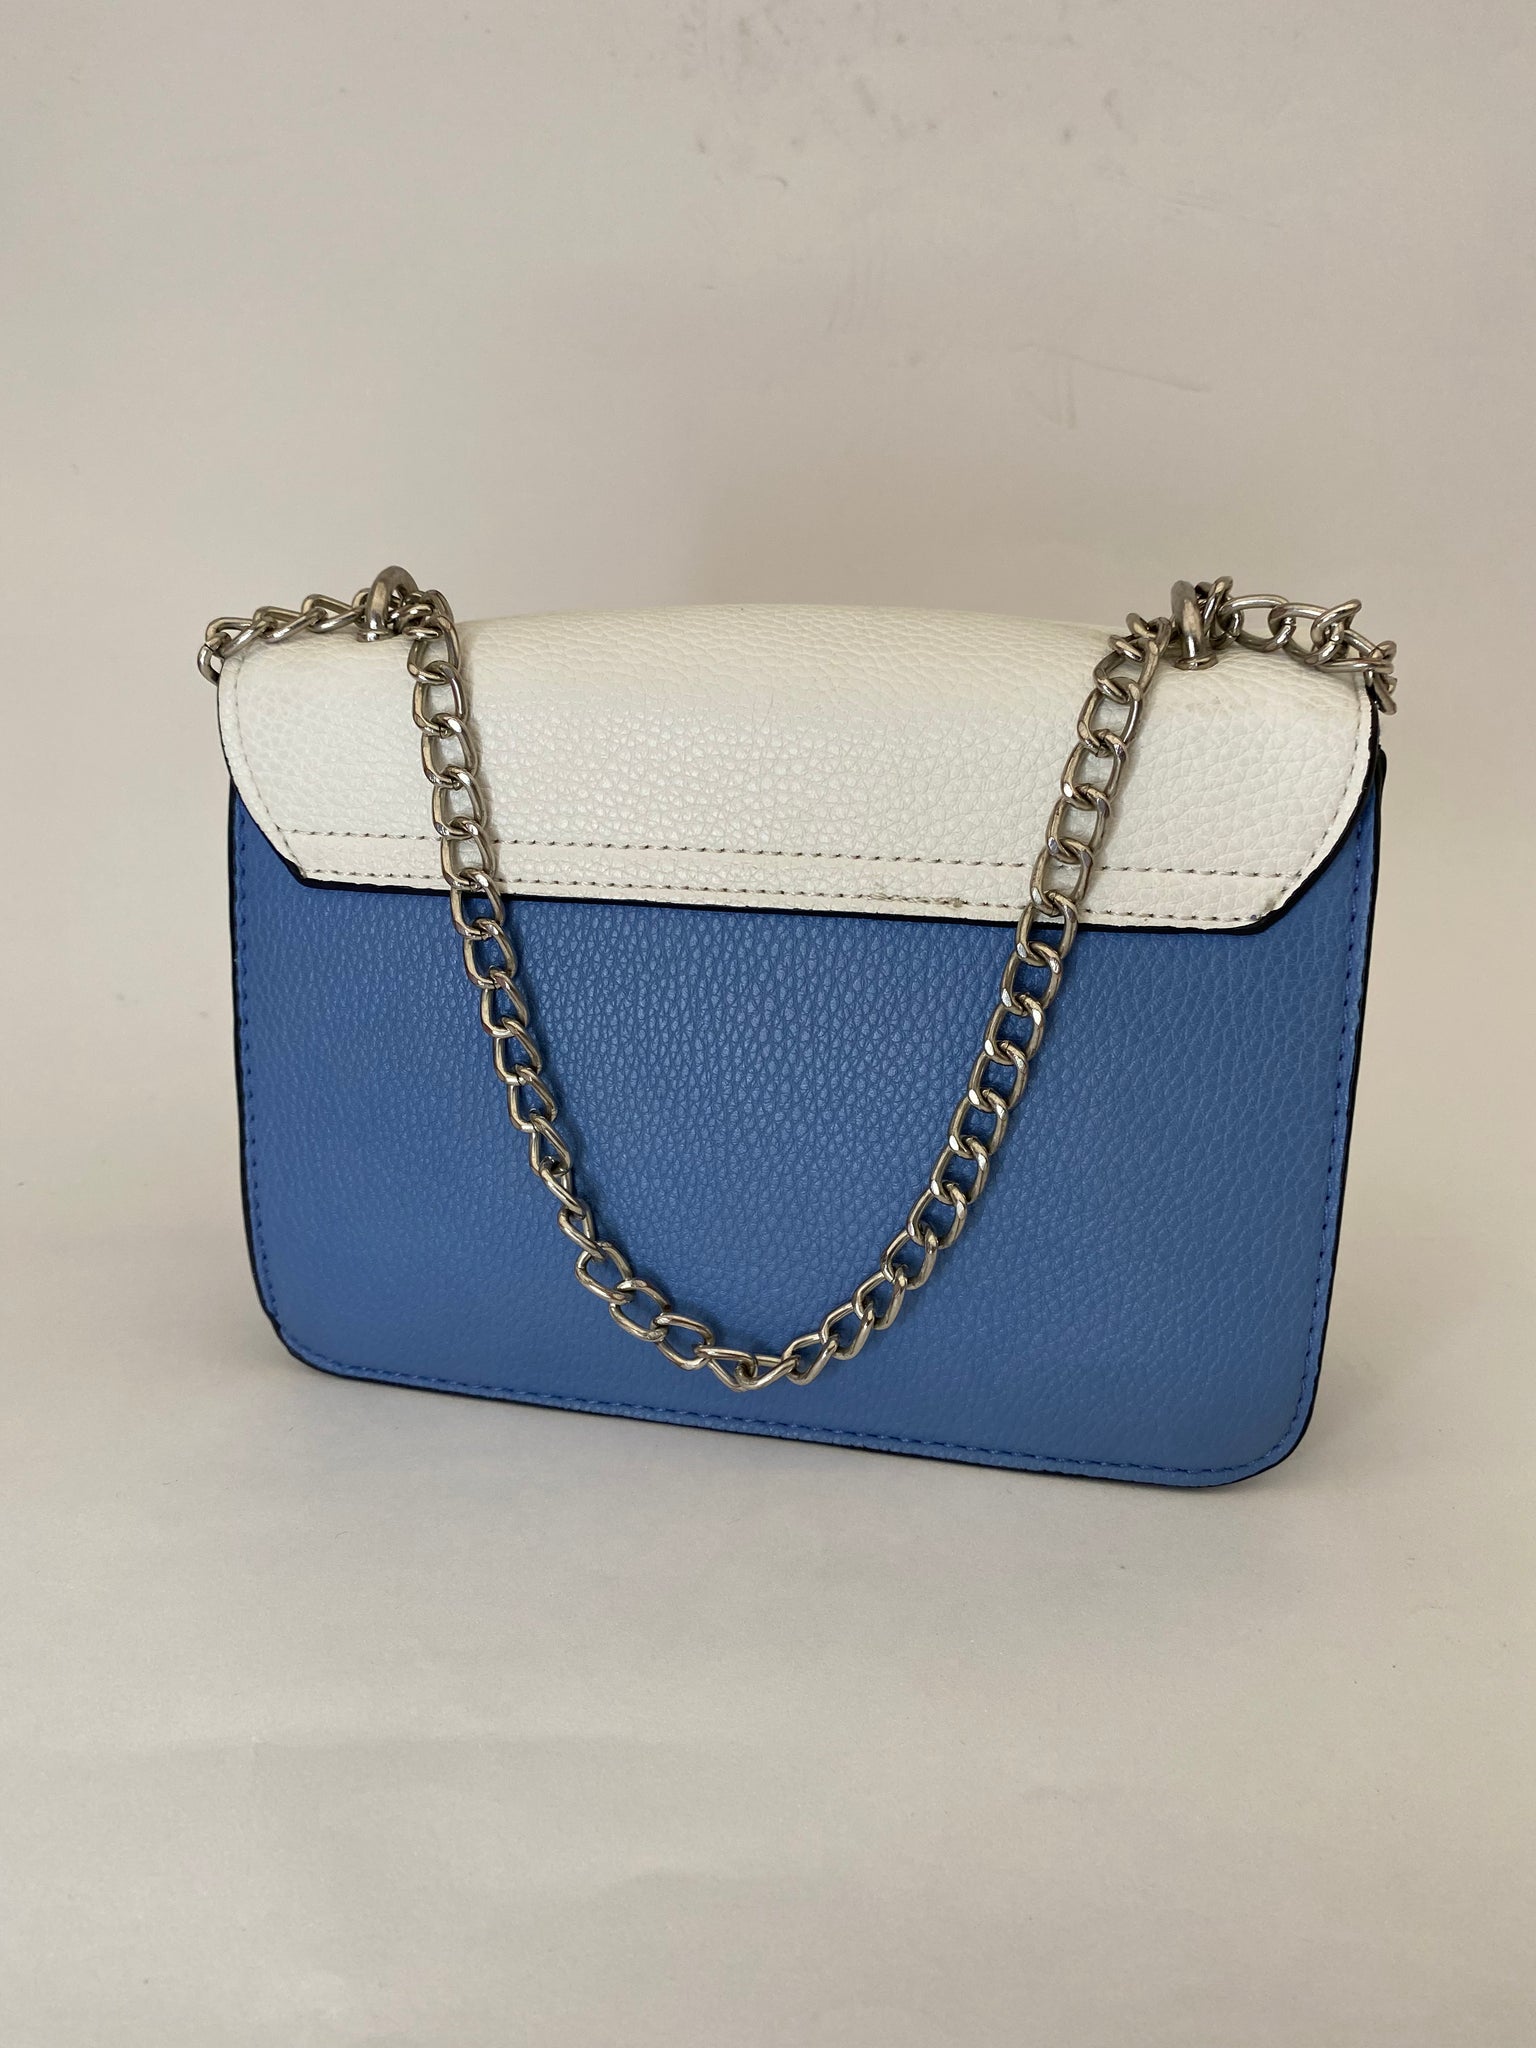 Bluemarine Handbag PRE-LOVED